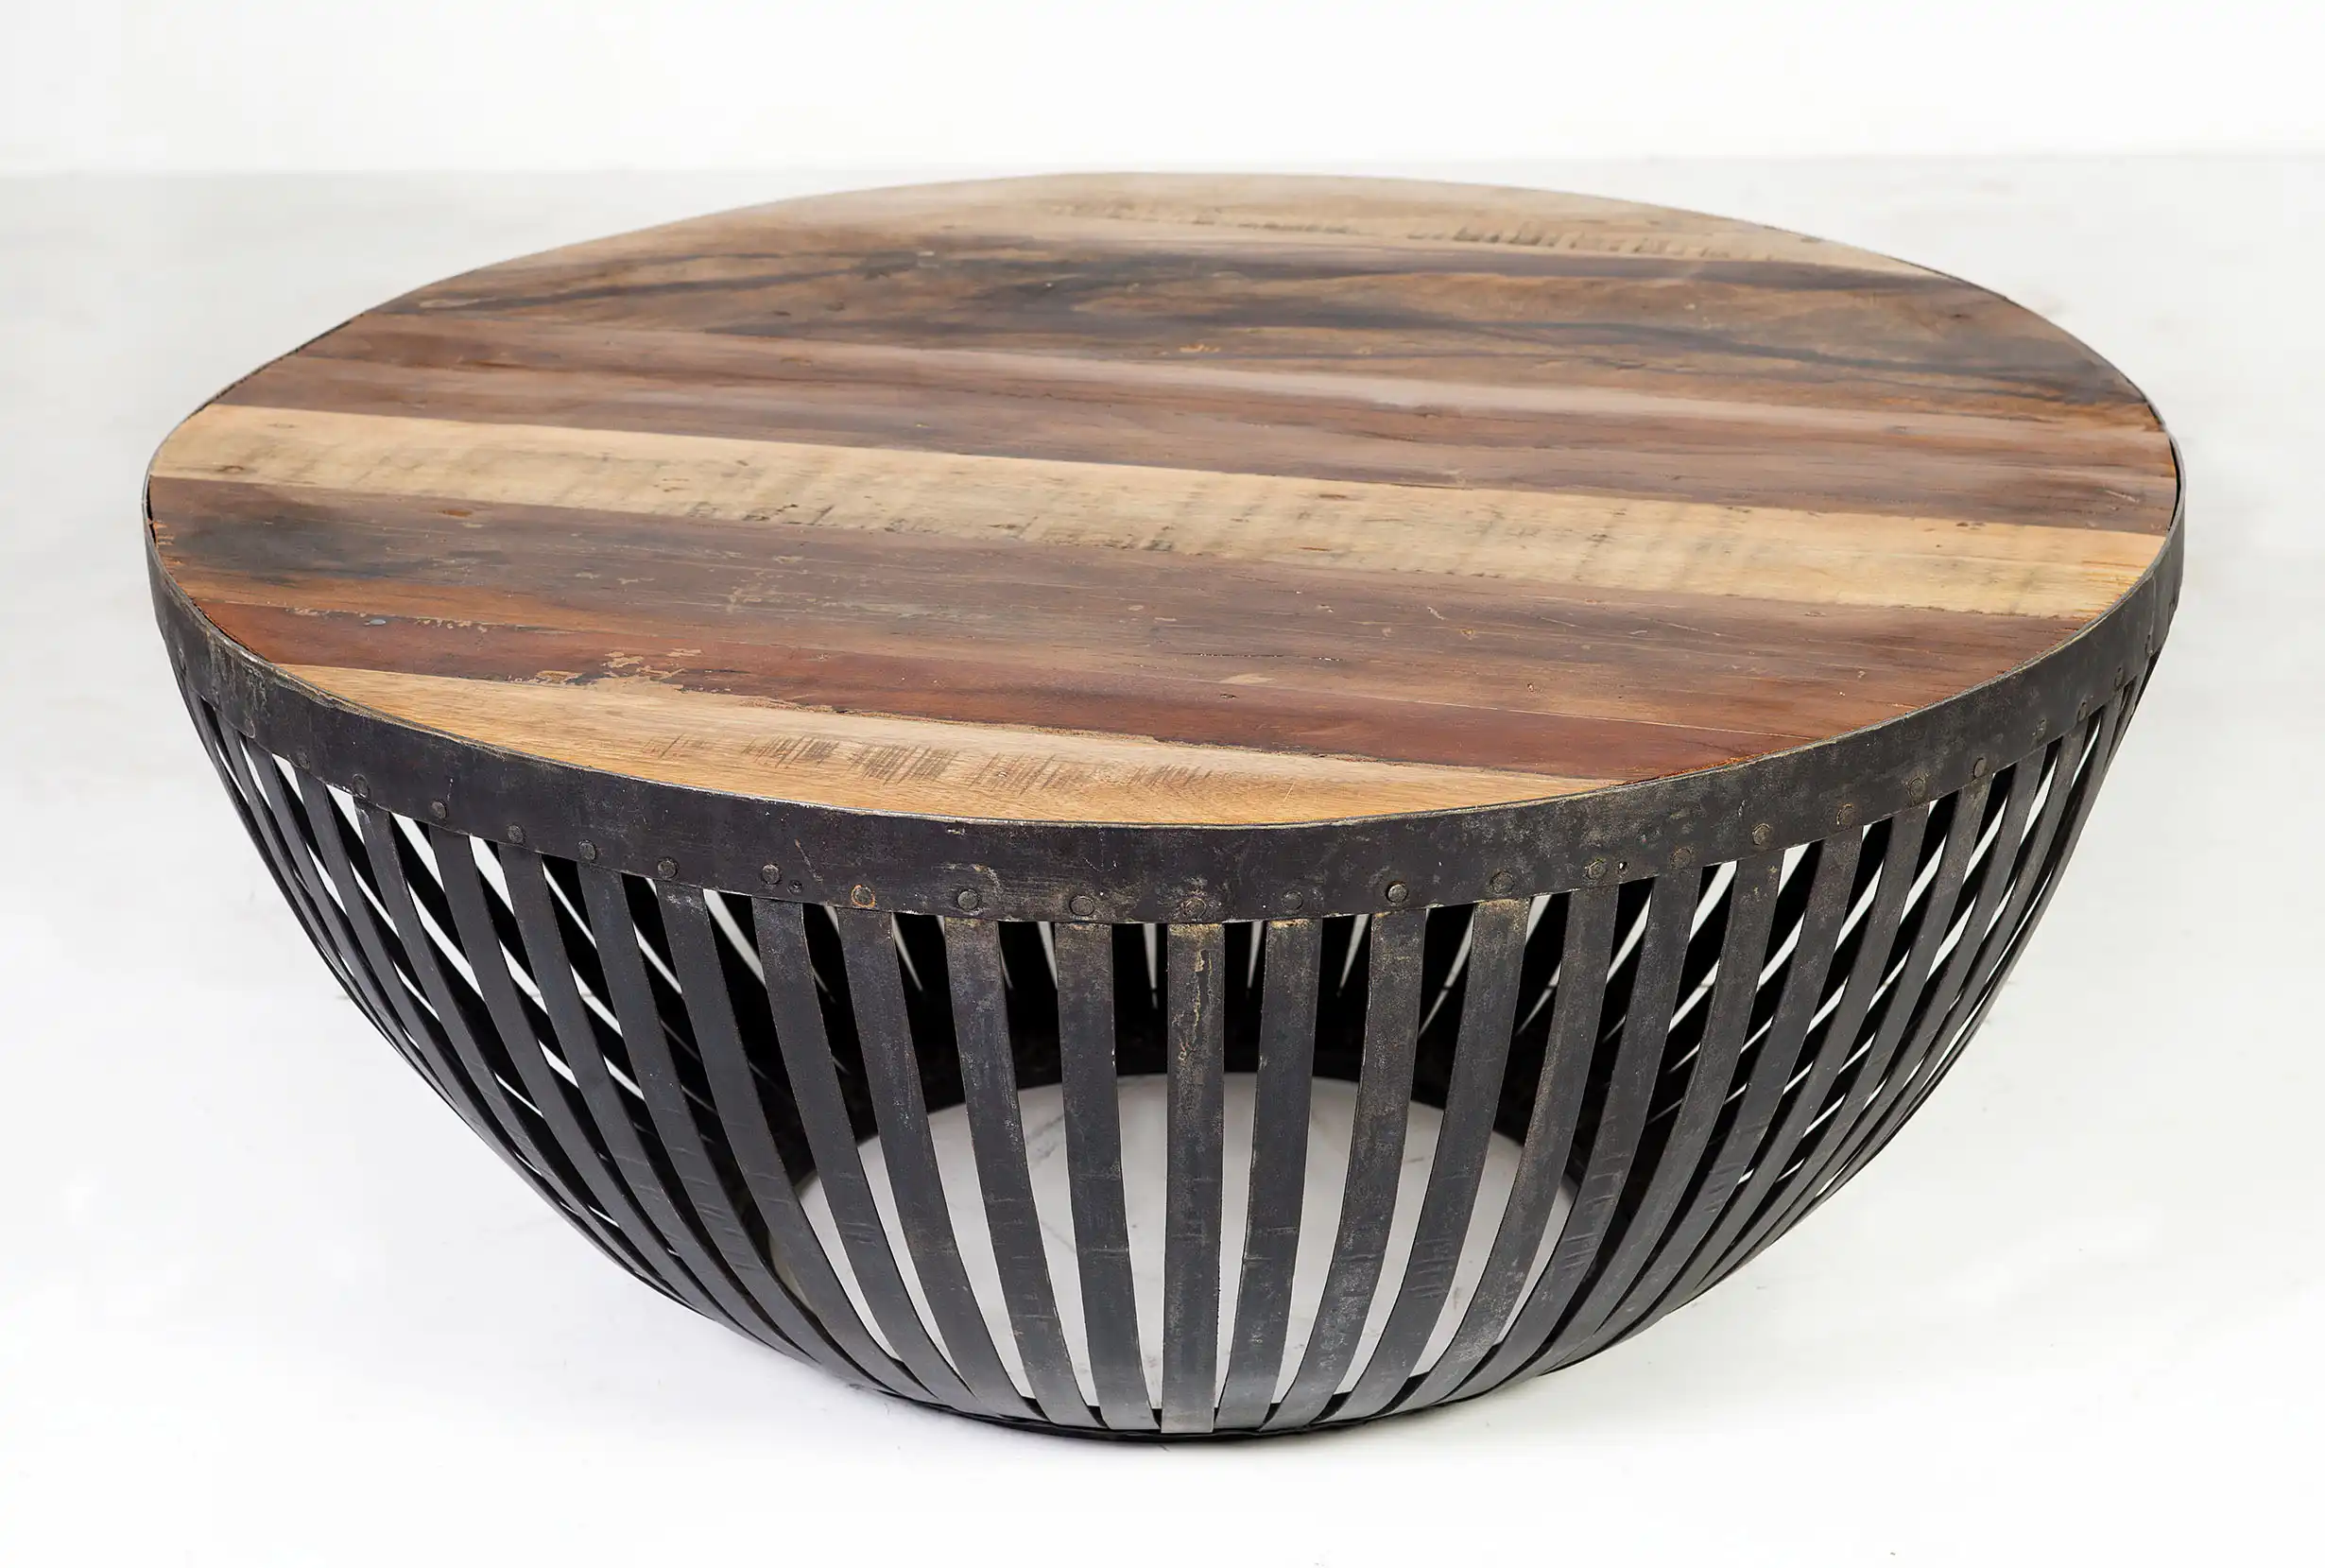 Wooden & Iron Round Coffee Table - popular handicrafts